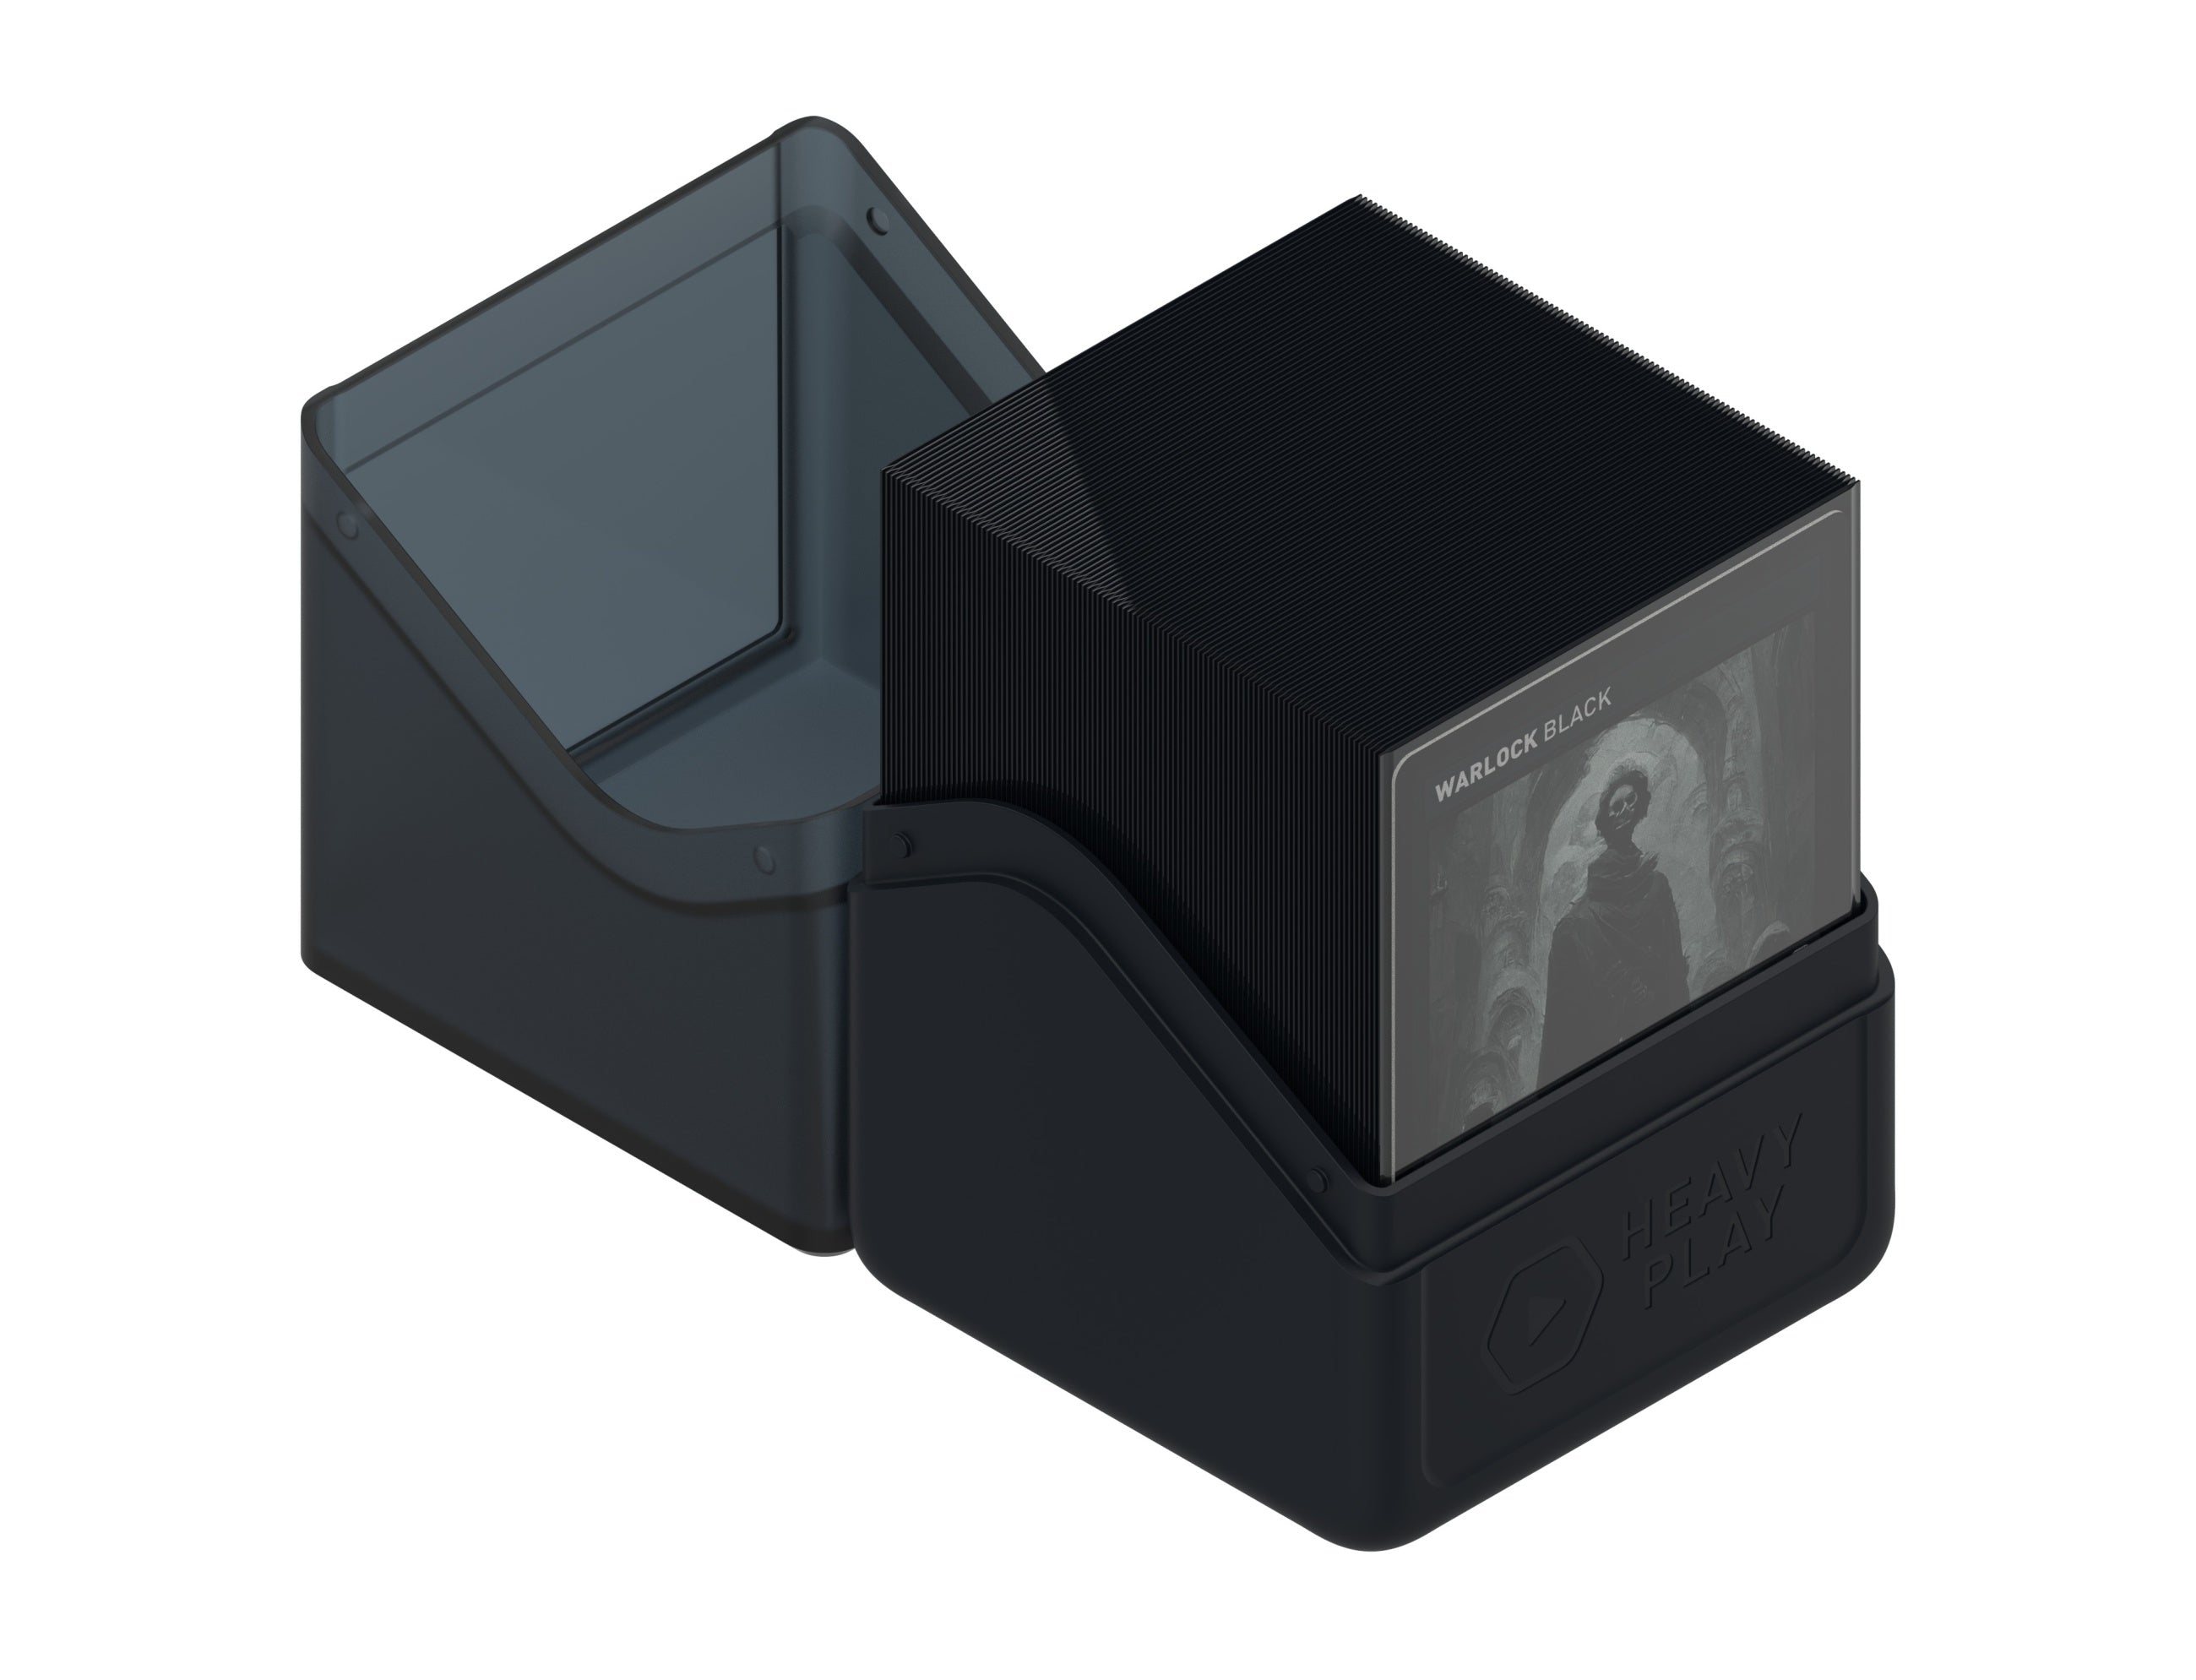 Heavy Play RFG Deck Box 100 Double Sleeved Warlock Black MKIWZ3TLYC |0|